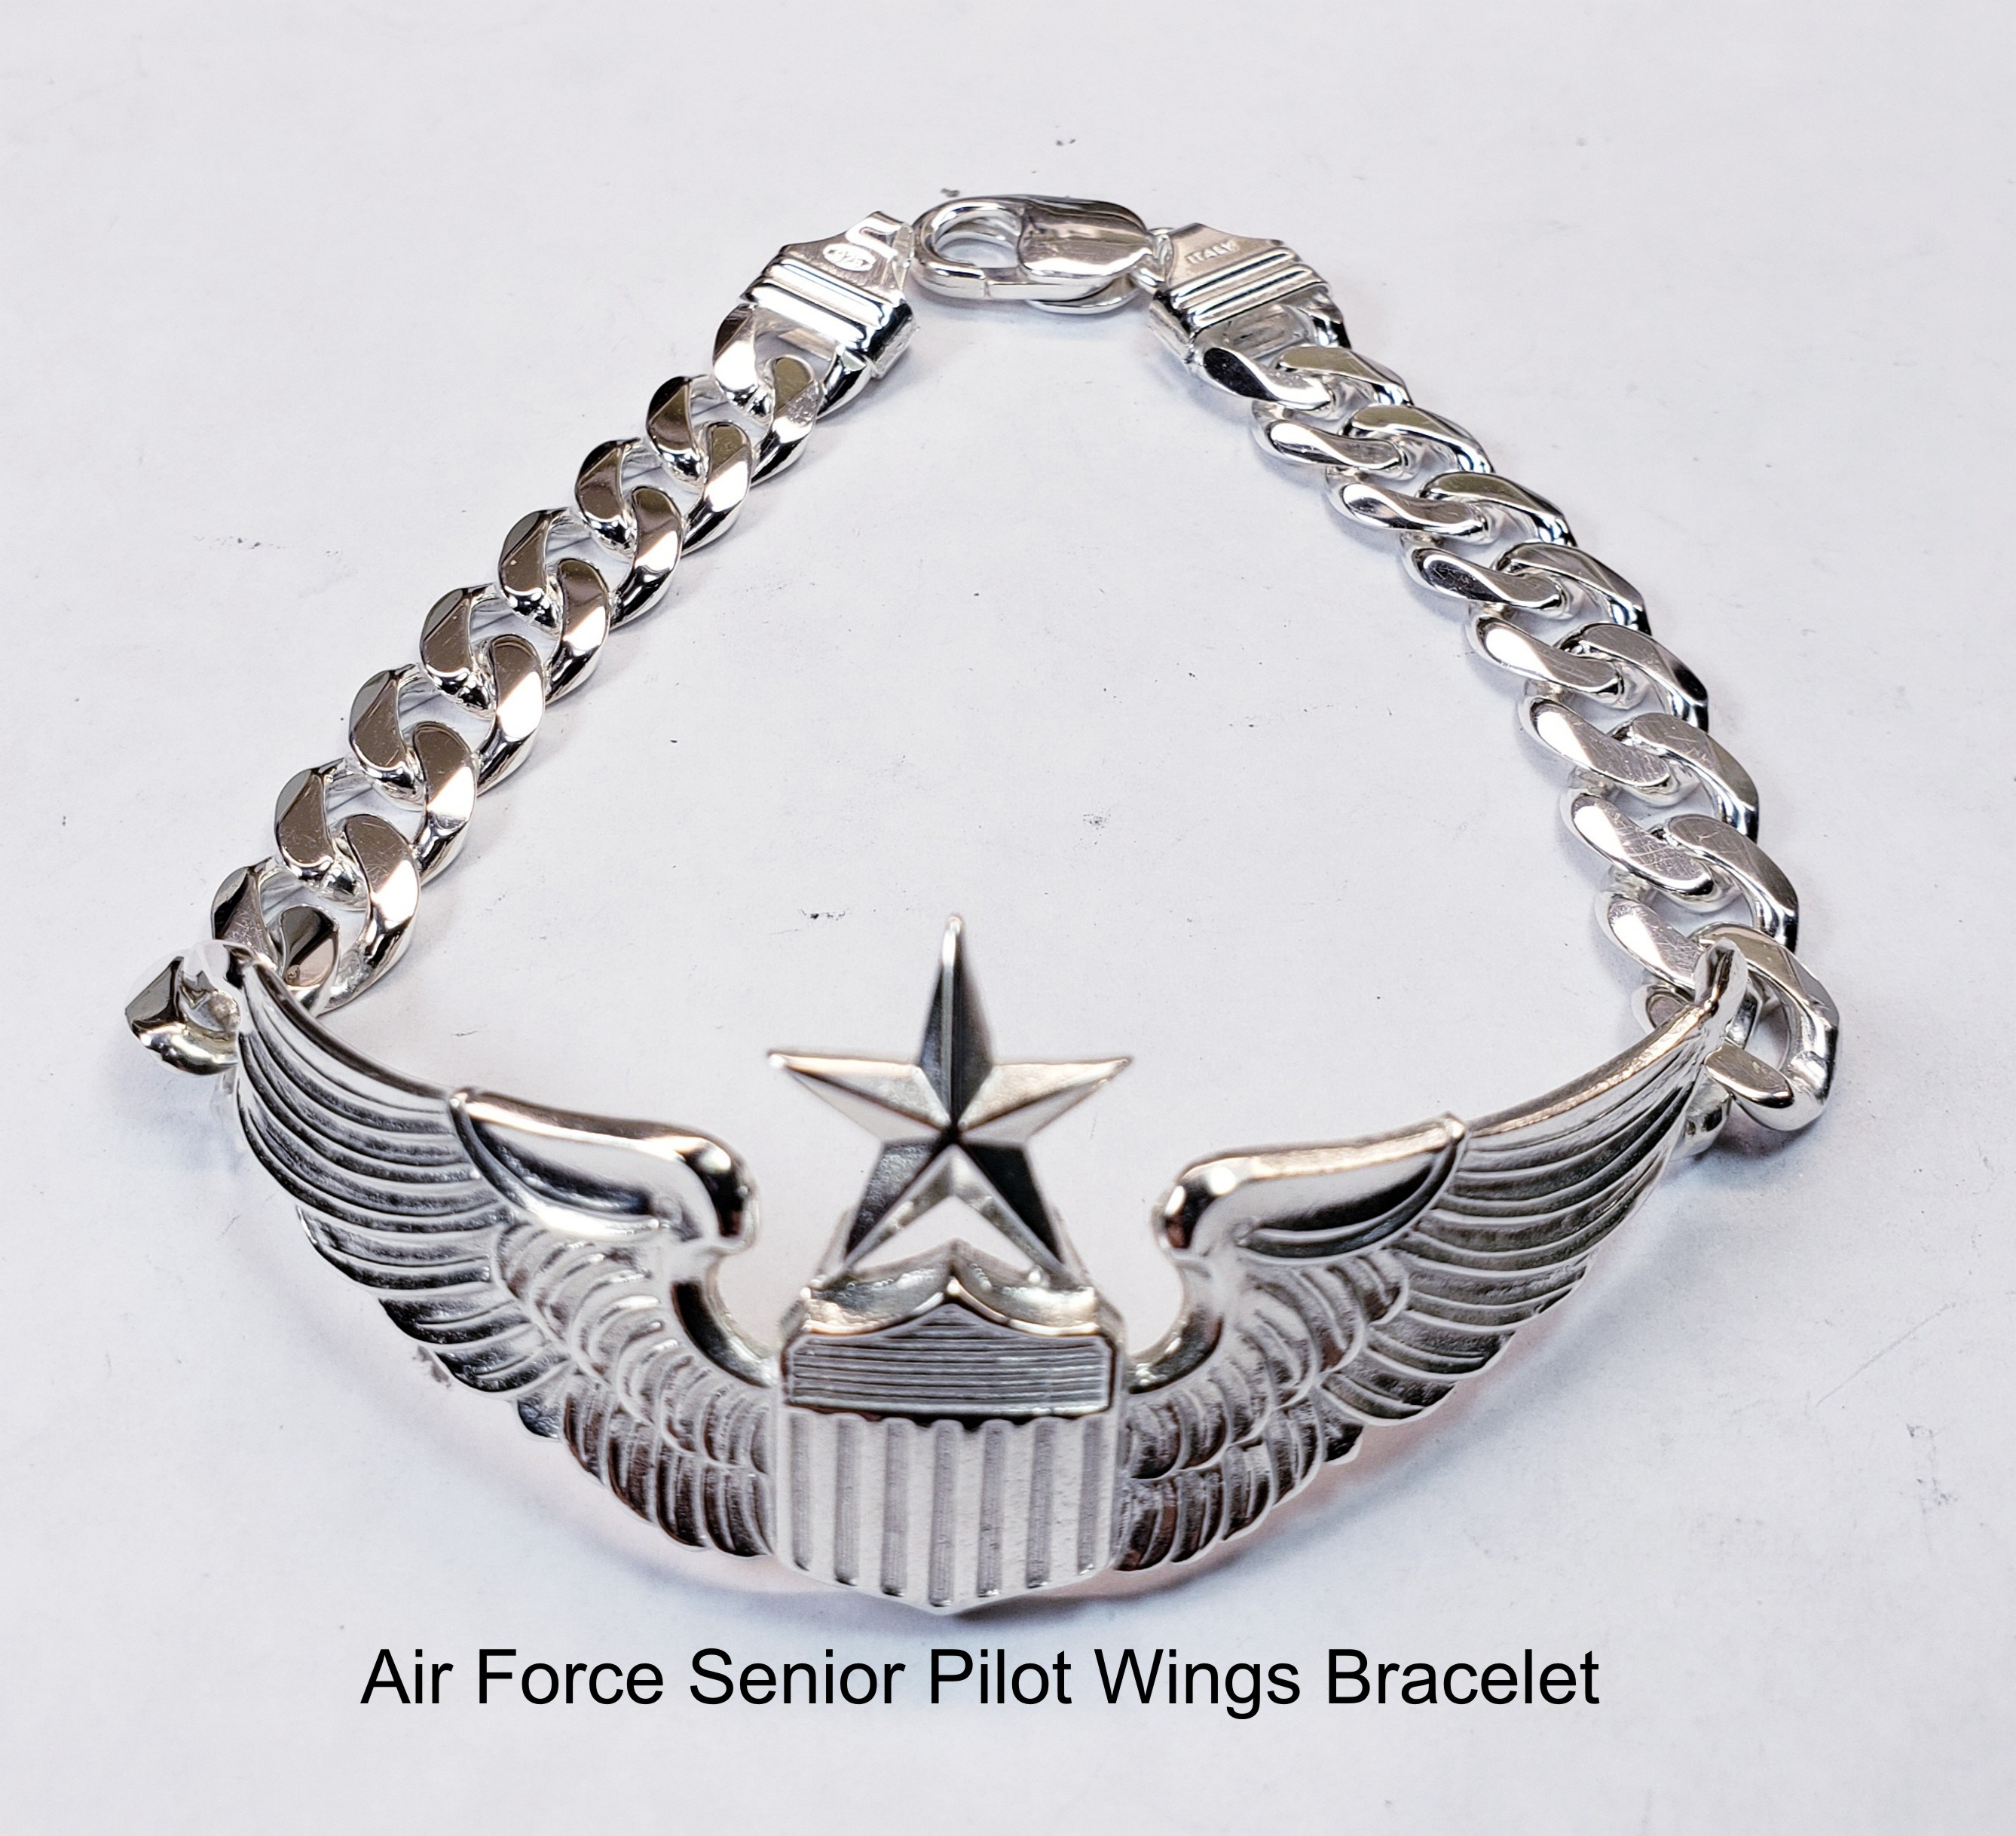 Air Force Senior Pilot Aviator's Bracelet